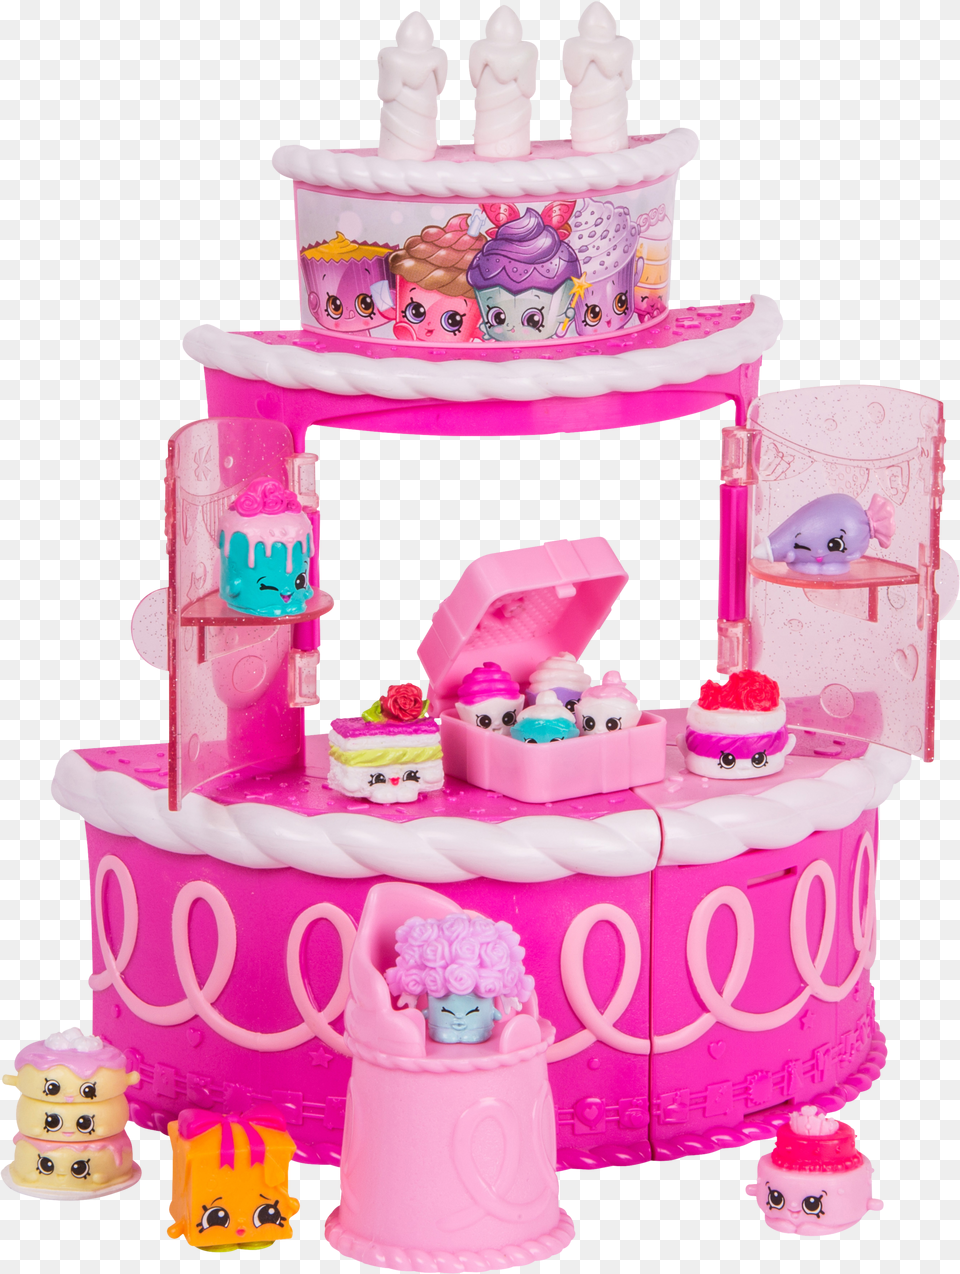 Shopkins S7 Playsetbirthday Cake Large Shopkins Birthday Cake Surprise Png Image